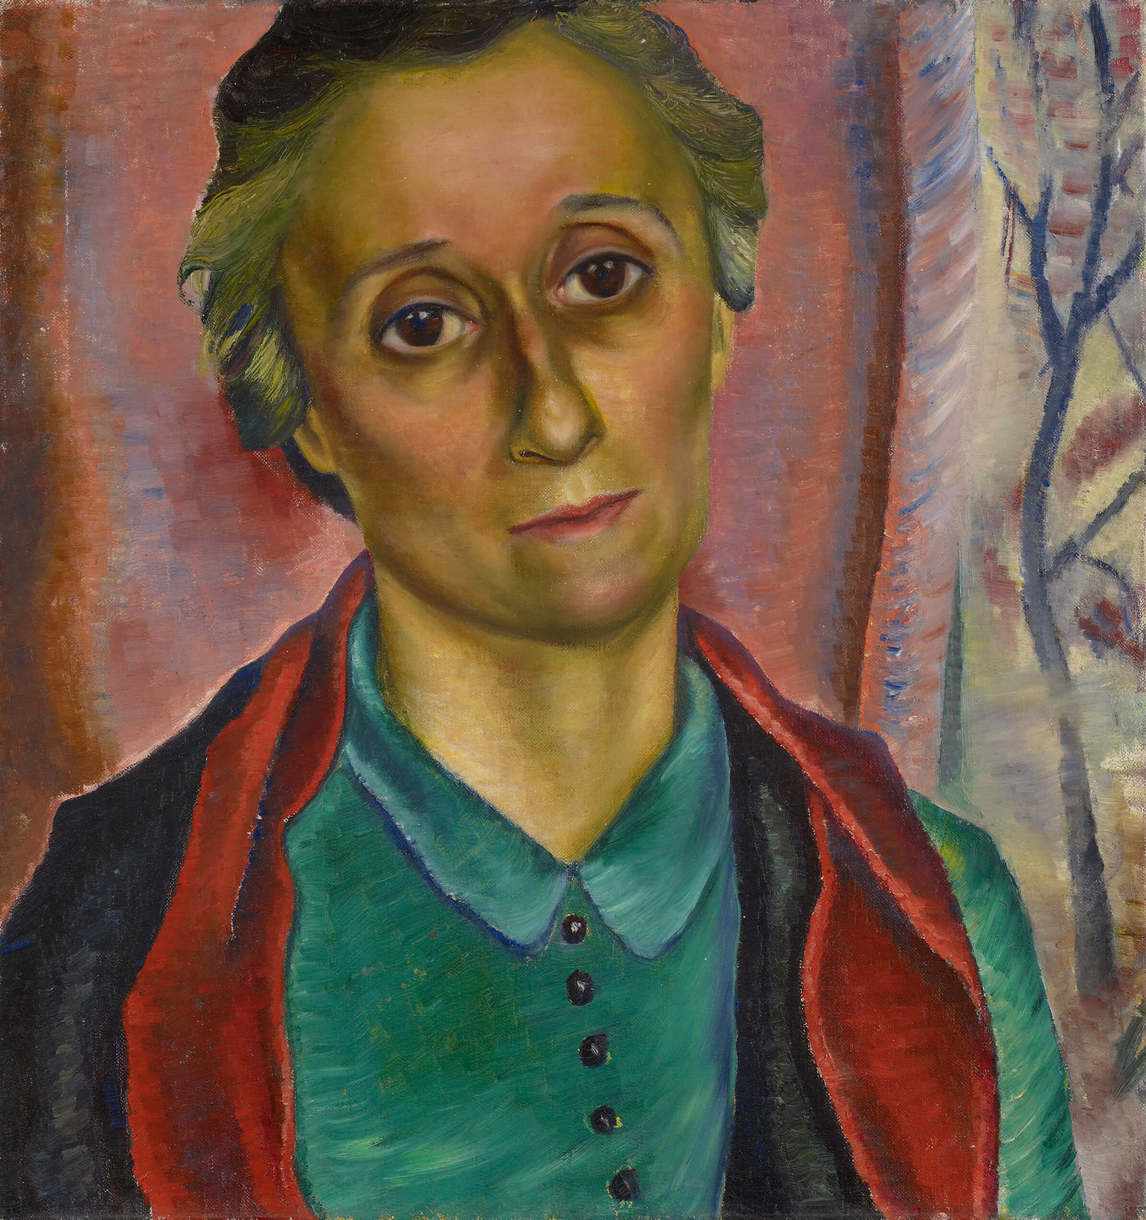 Art Canada Institute, Prudence Heward, Portrait Study, 1938